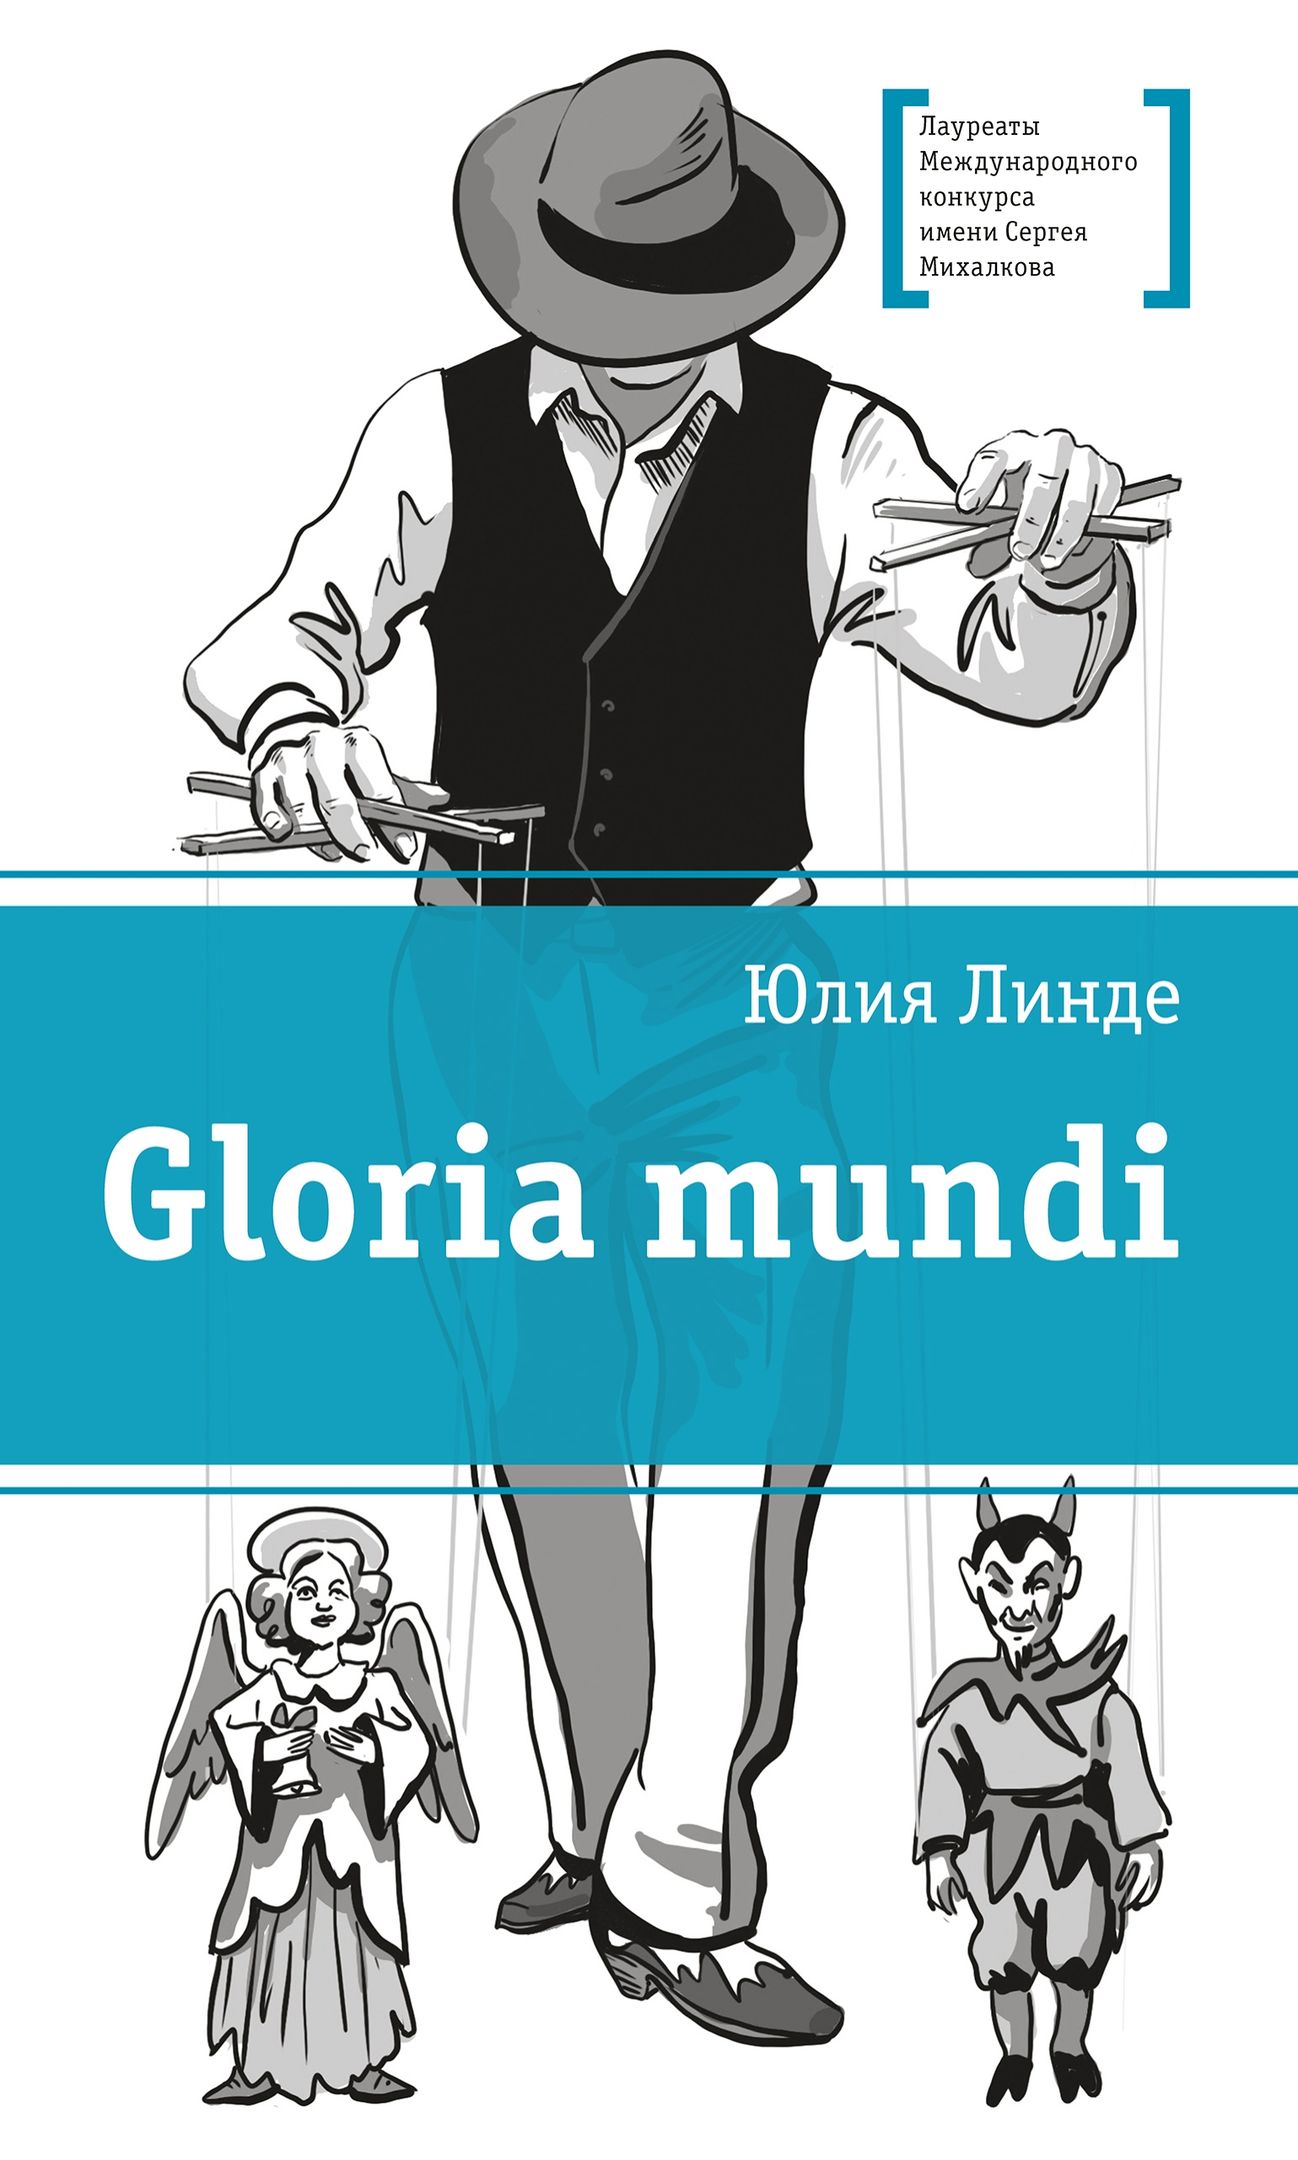 Линде Юлия - Gloria mundi - 2021